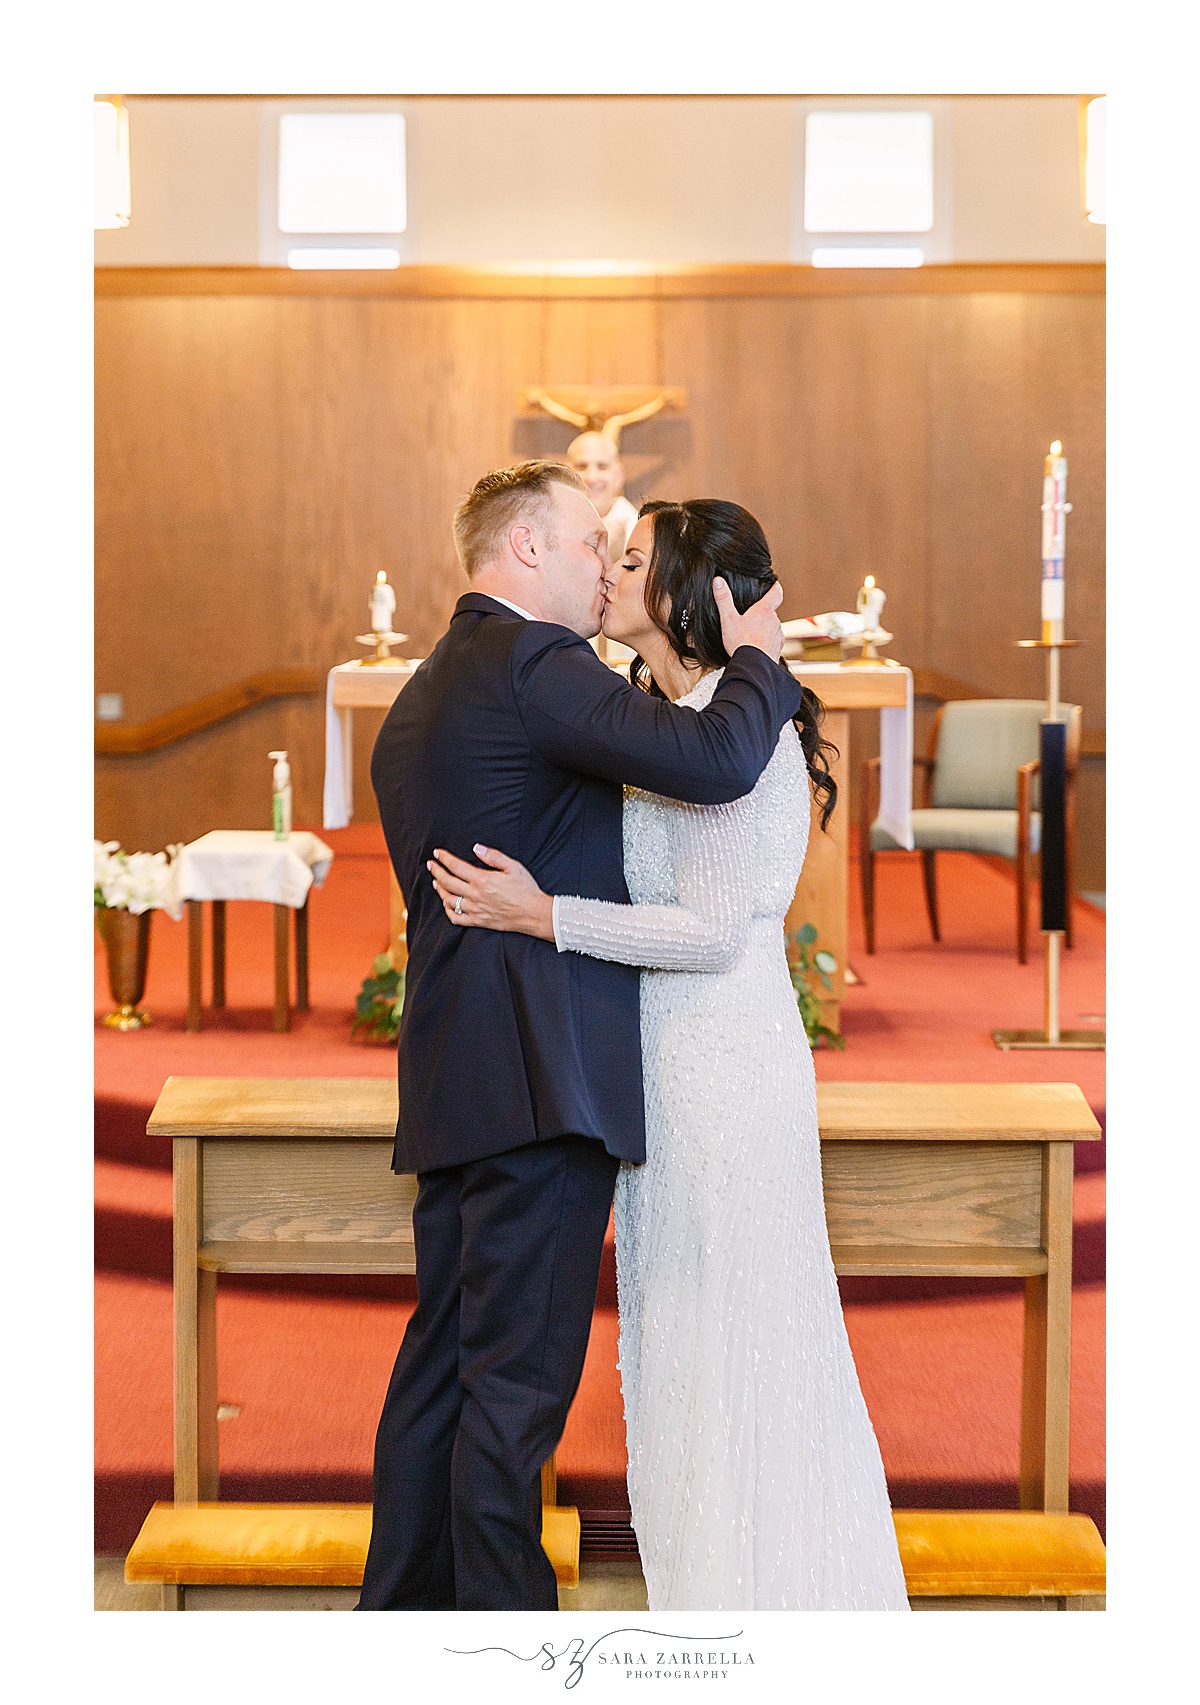 newlyweds kiss during traditional church wedding